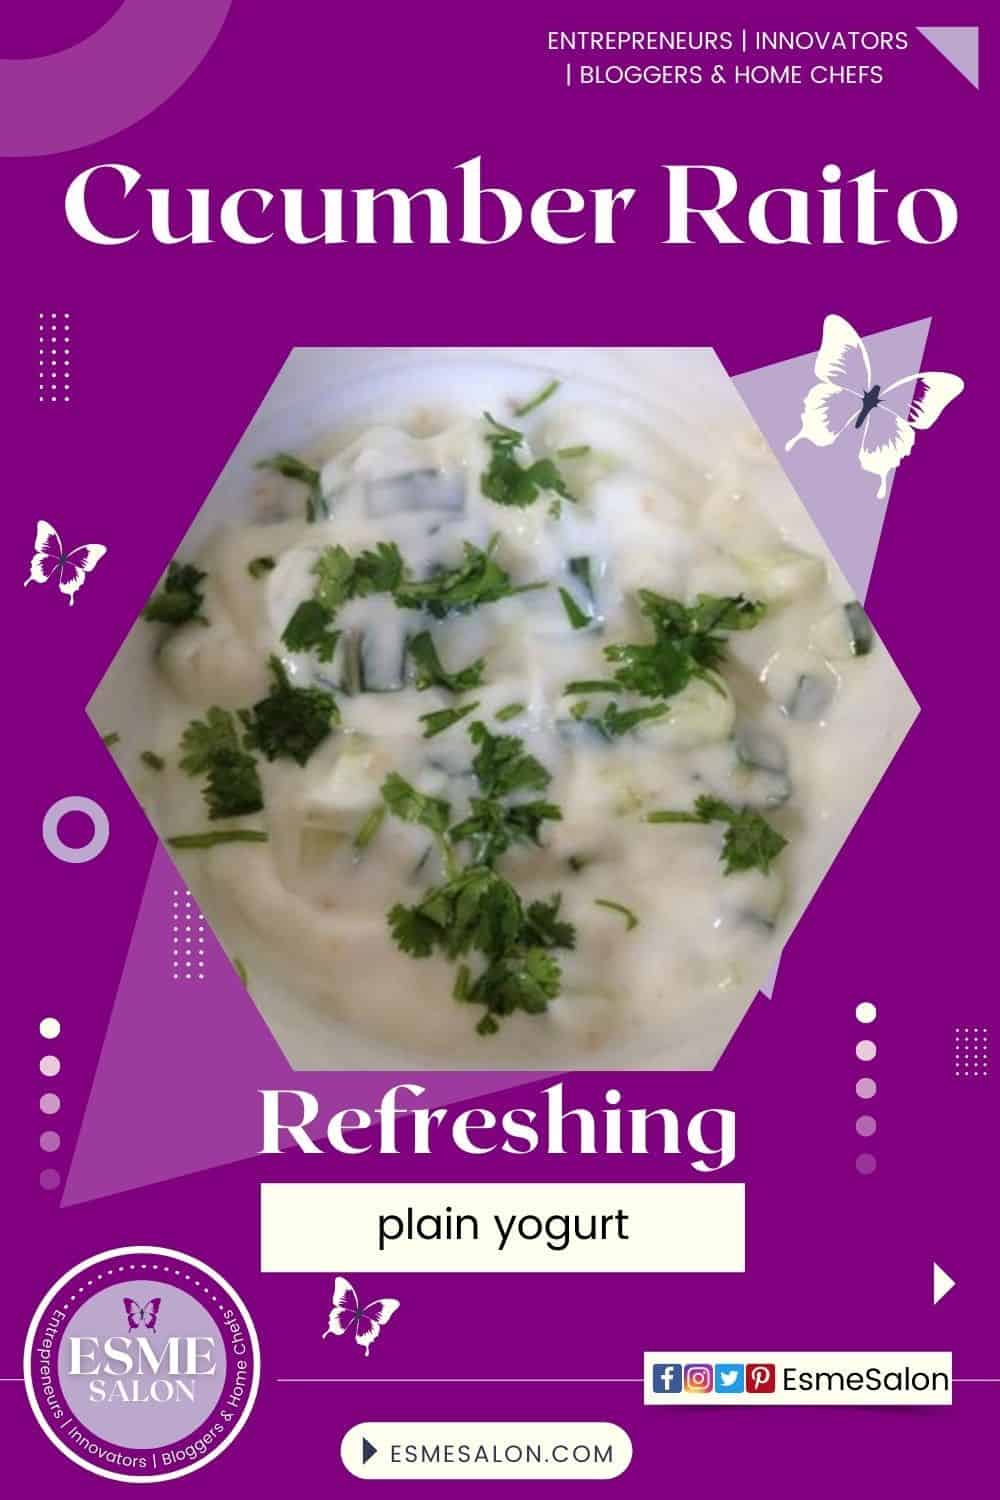 an image of a white bowl with refreshing yogurt Cucumber Raito